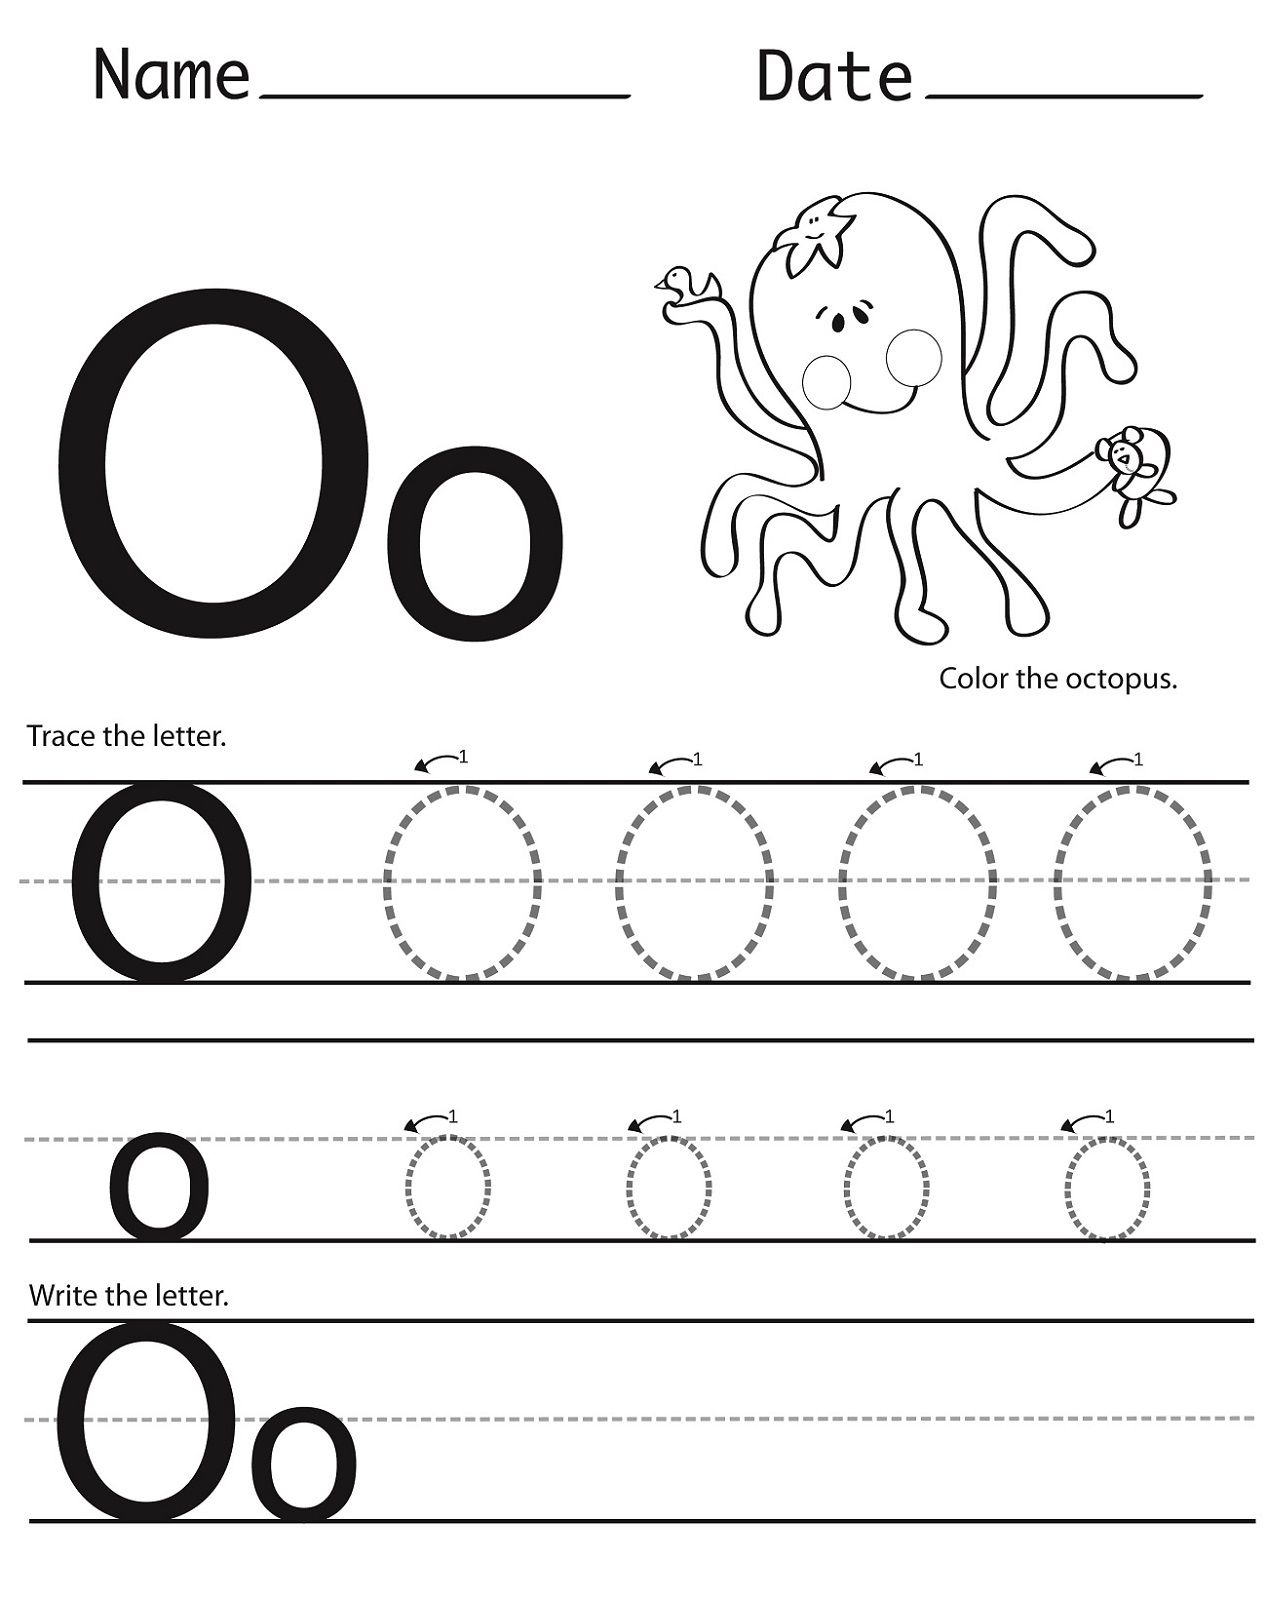 Letter O Worksheets - Kids Learning Activity | Letter O intended for Letter O Tracing Preschool